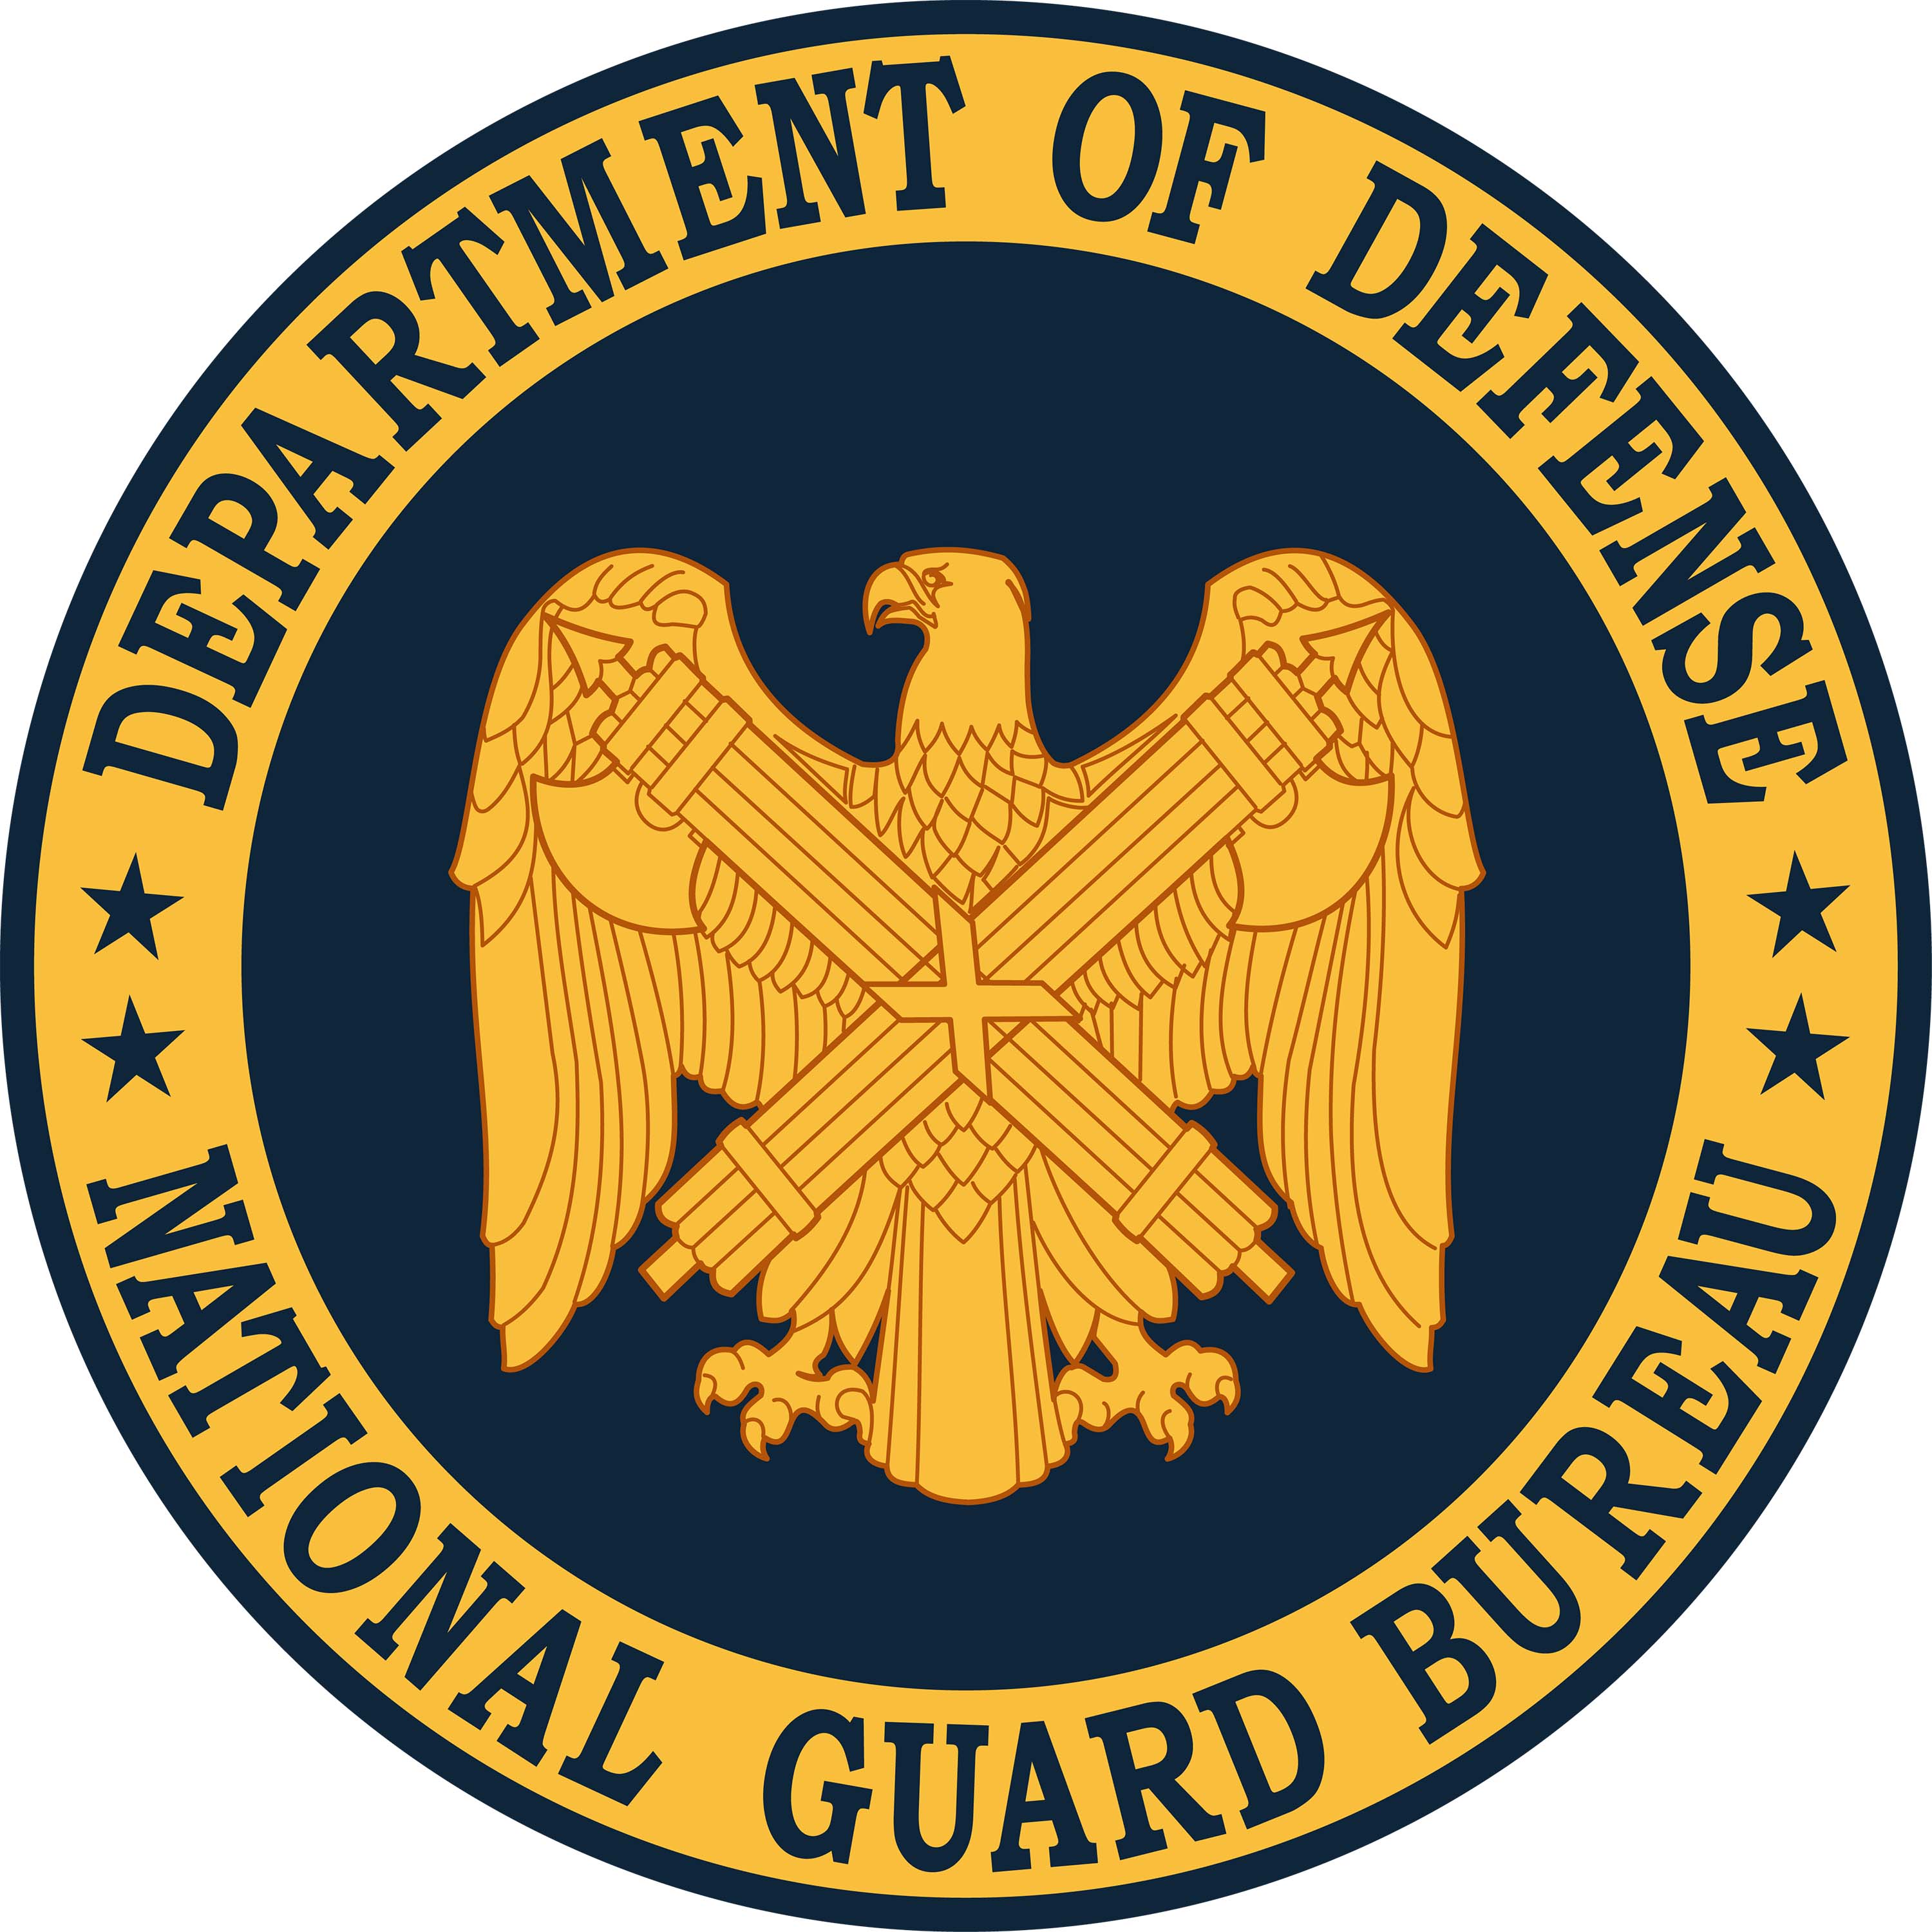 Emblem of the United States National Guard Bureau